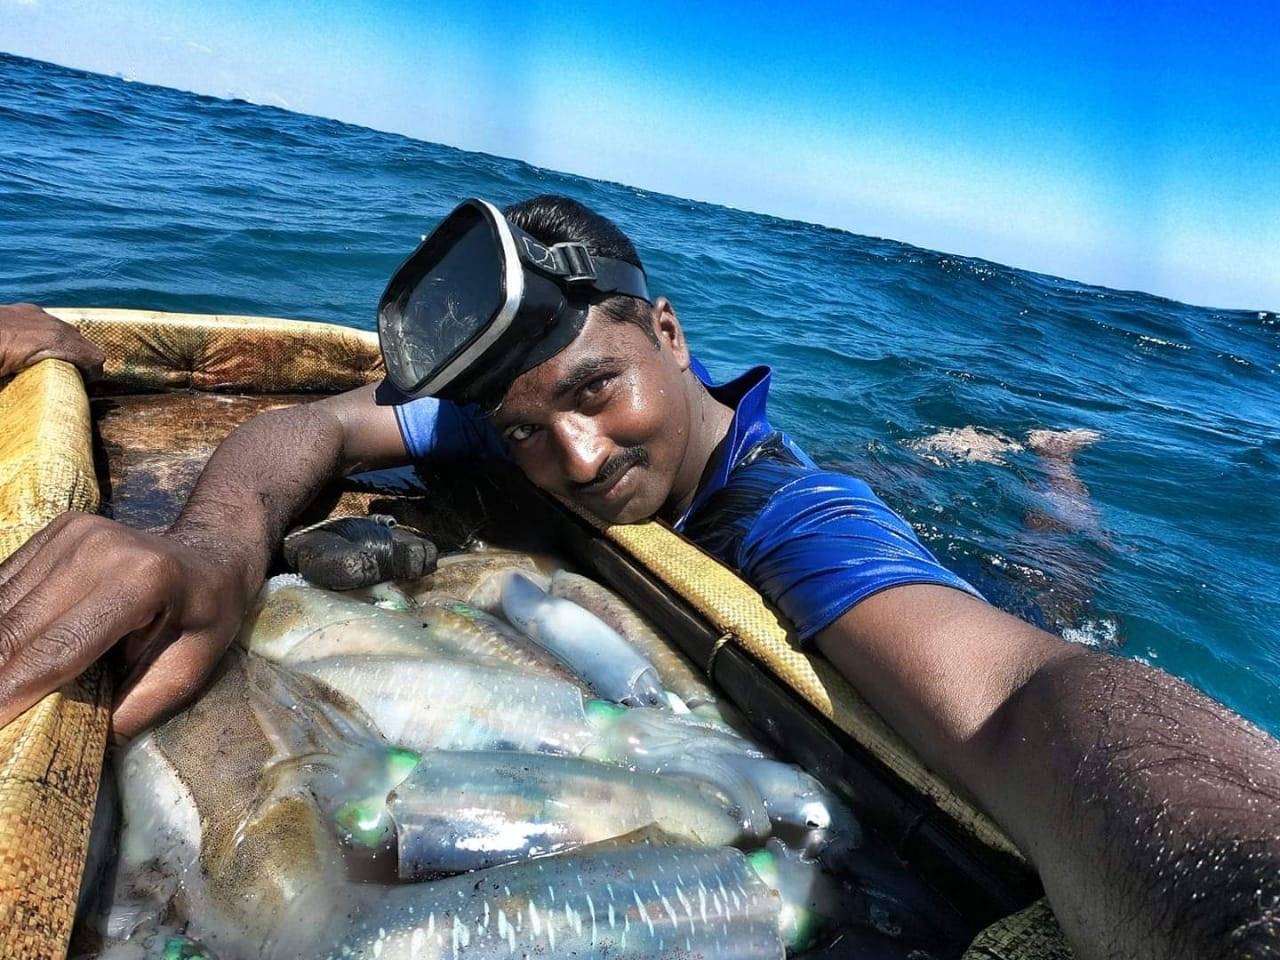 Thoothukudi fisherman YouTube channel